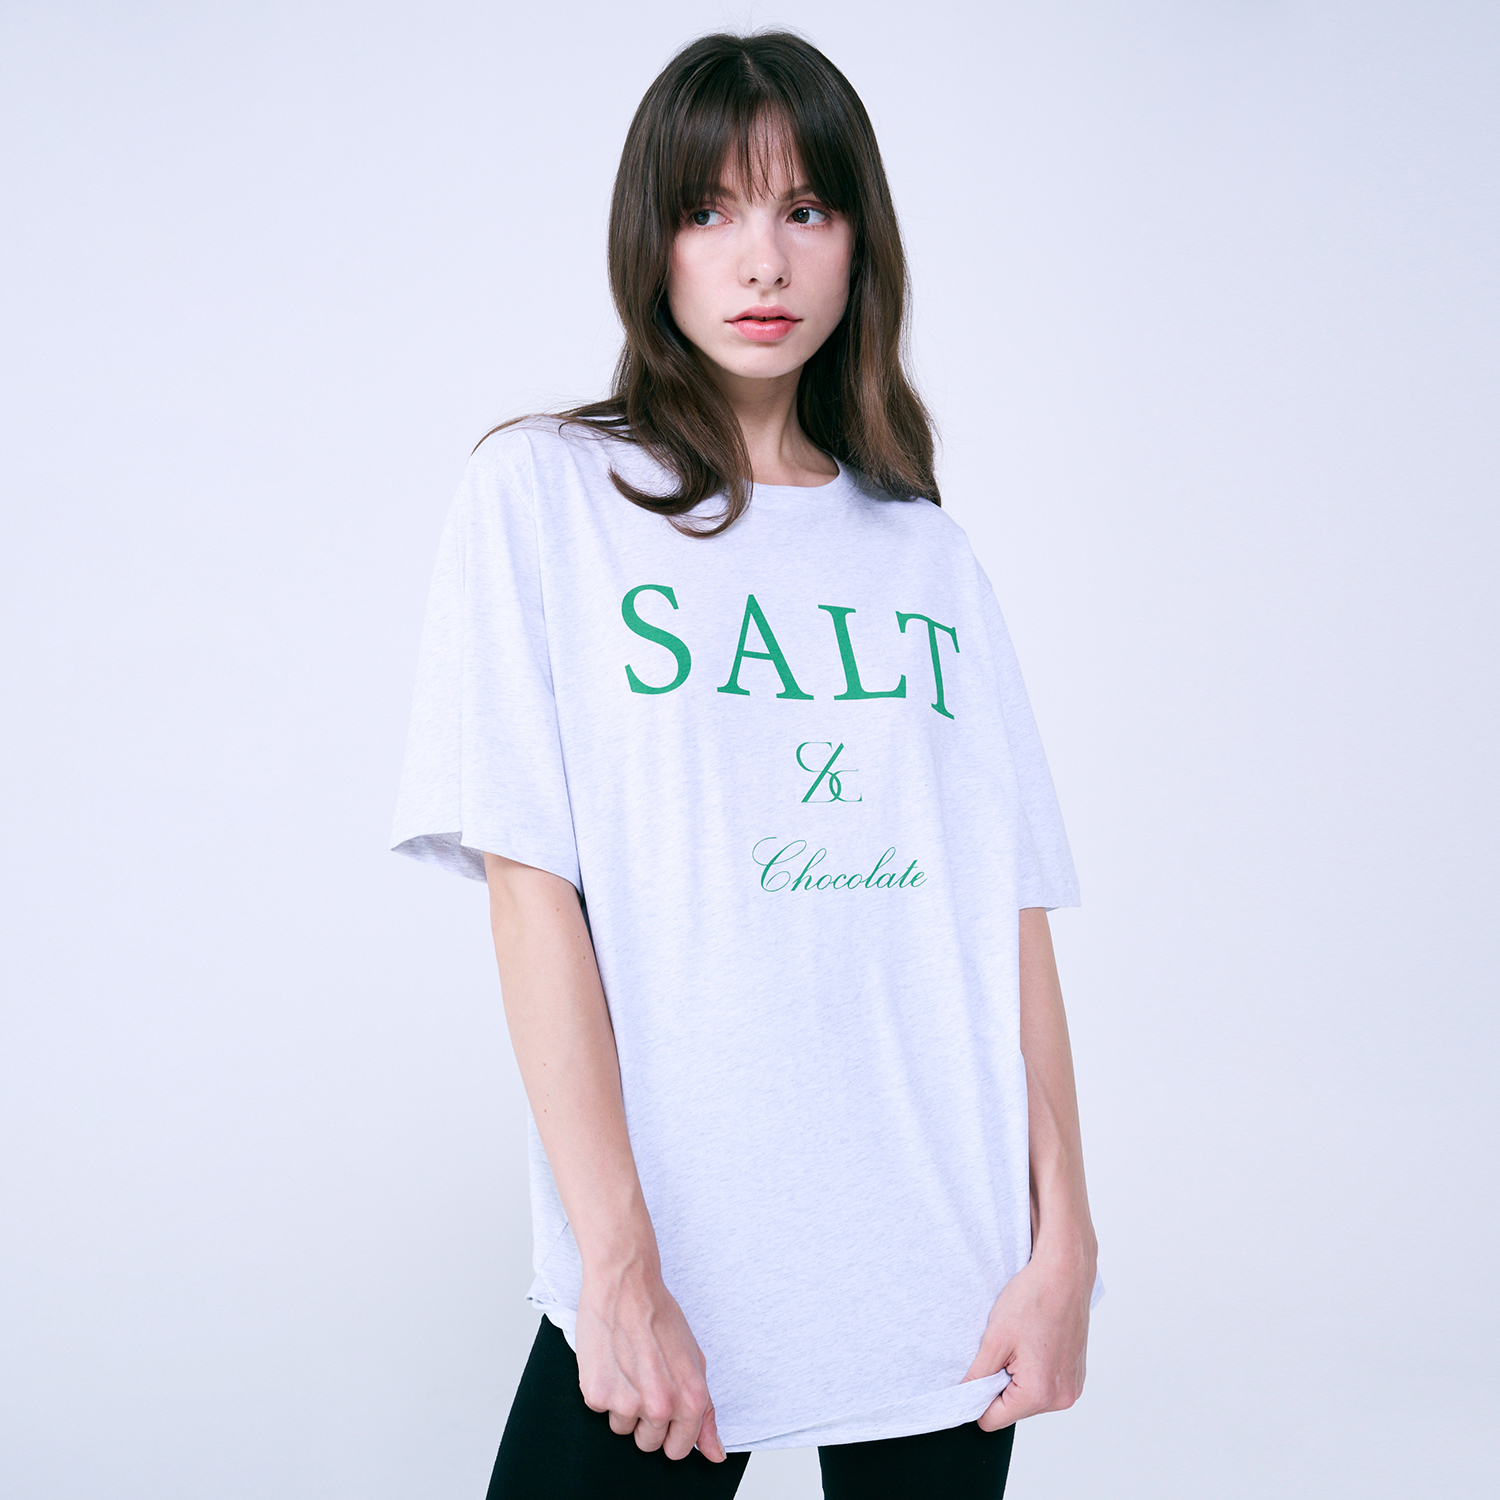 SALT 레터링 티셔츠 멜란지그레이 4W2321002